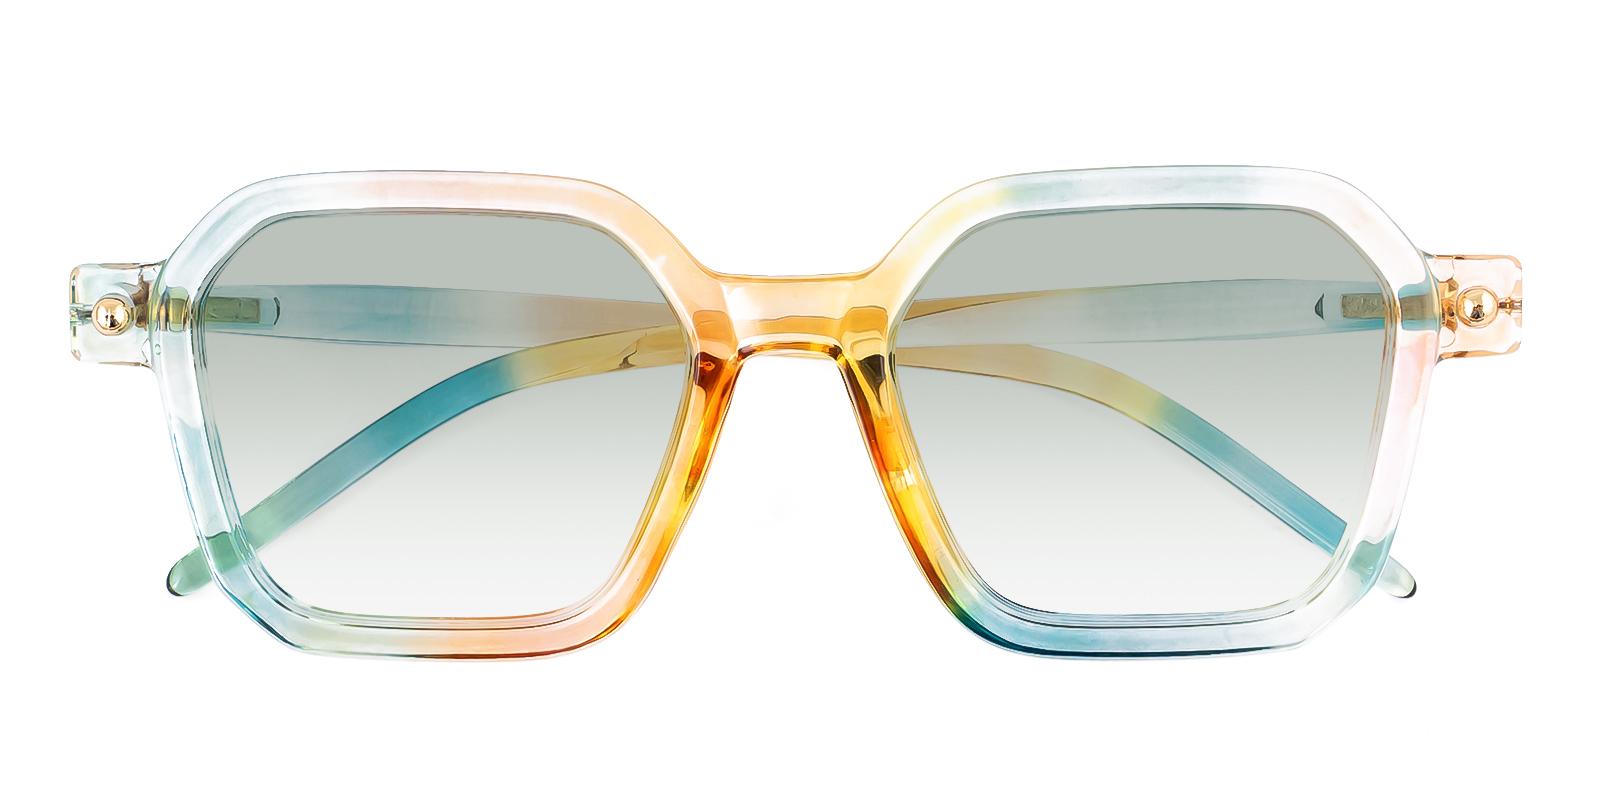 Healtharian Multicolor Plastic Sunglasses , UniversalBridgeFit Frames from ABBE Glasses